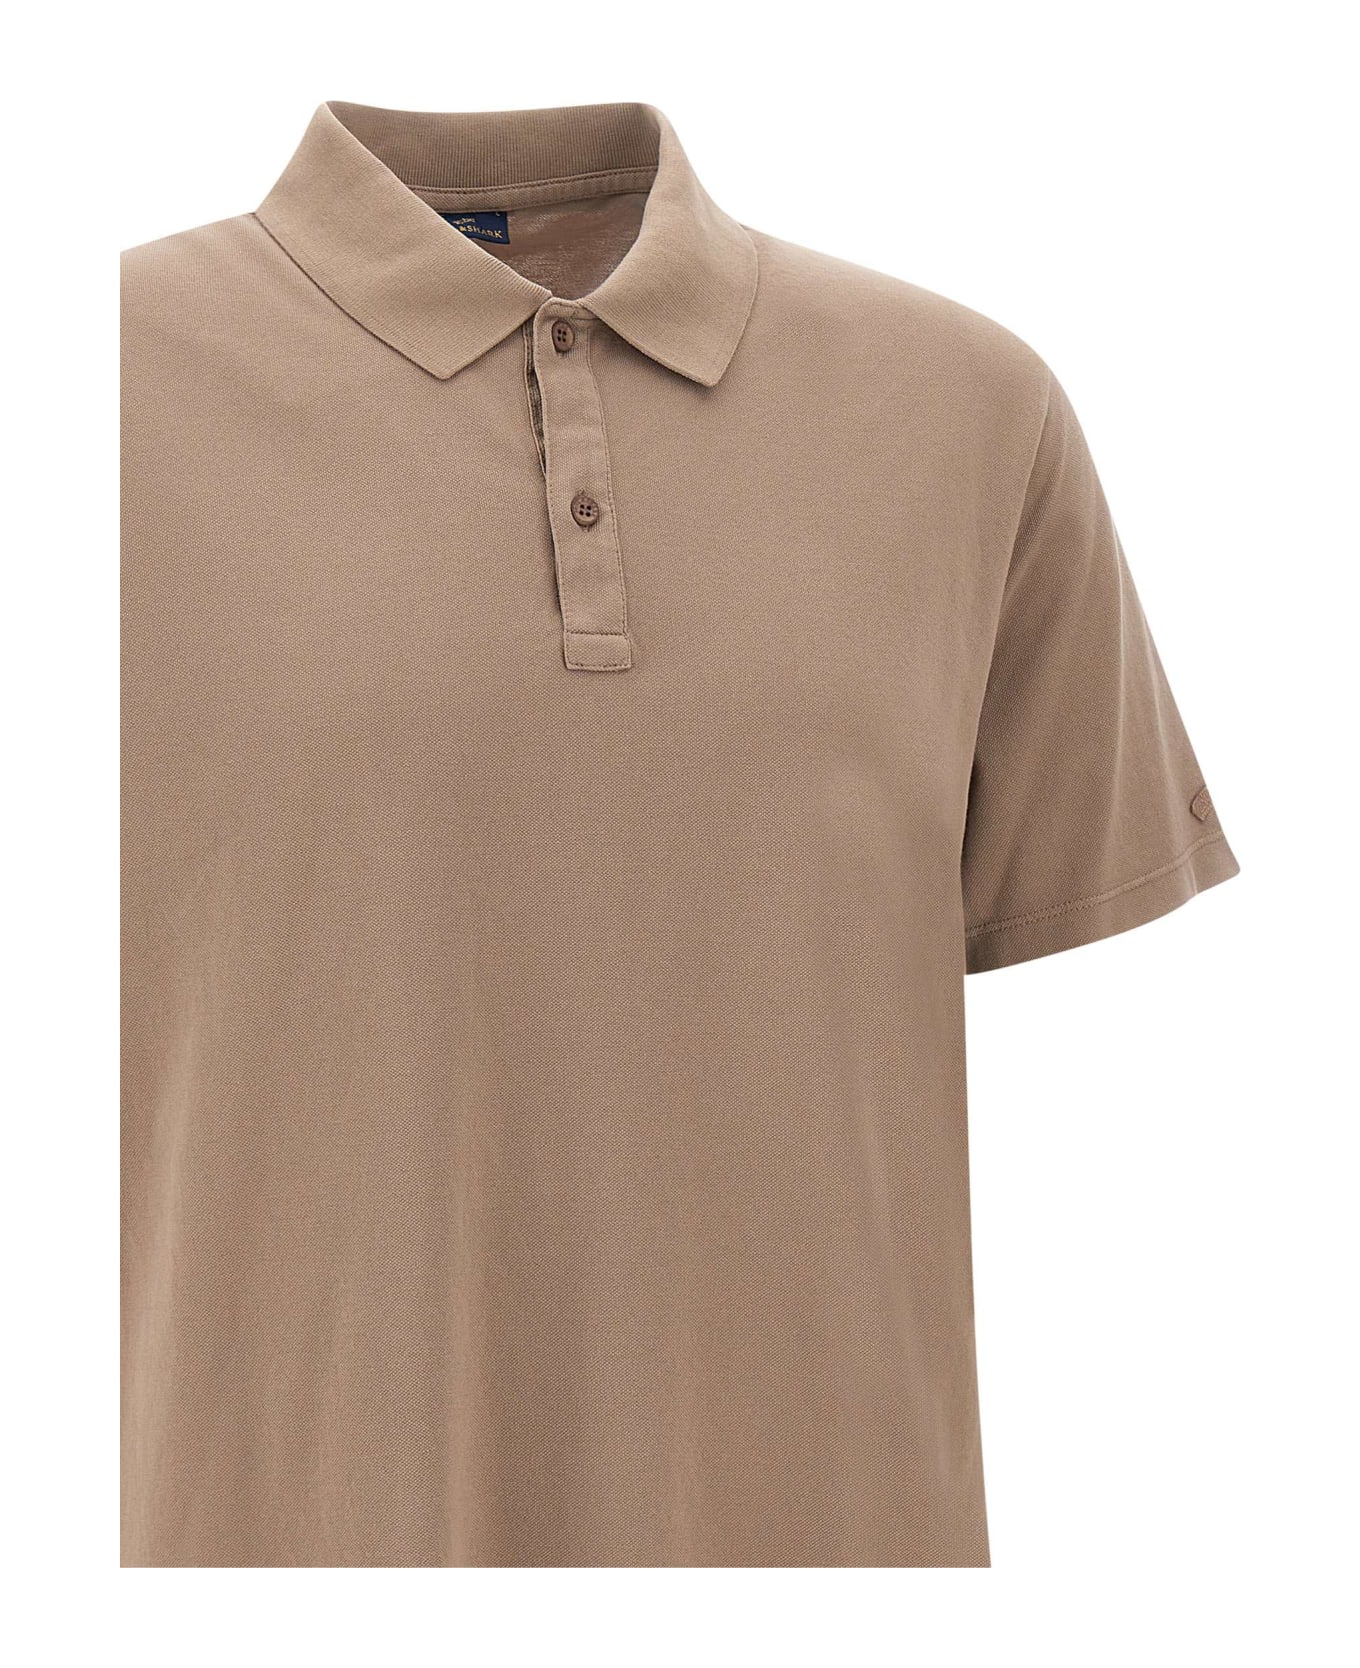 Paul&Shark Cotton Polo Shirt - BEIGE ポロシャツ